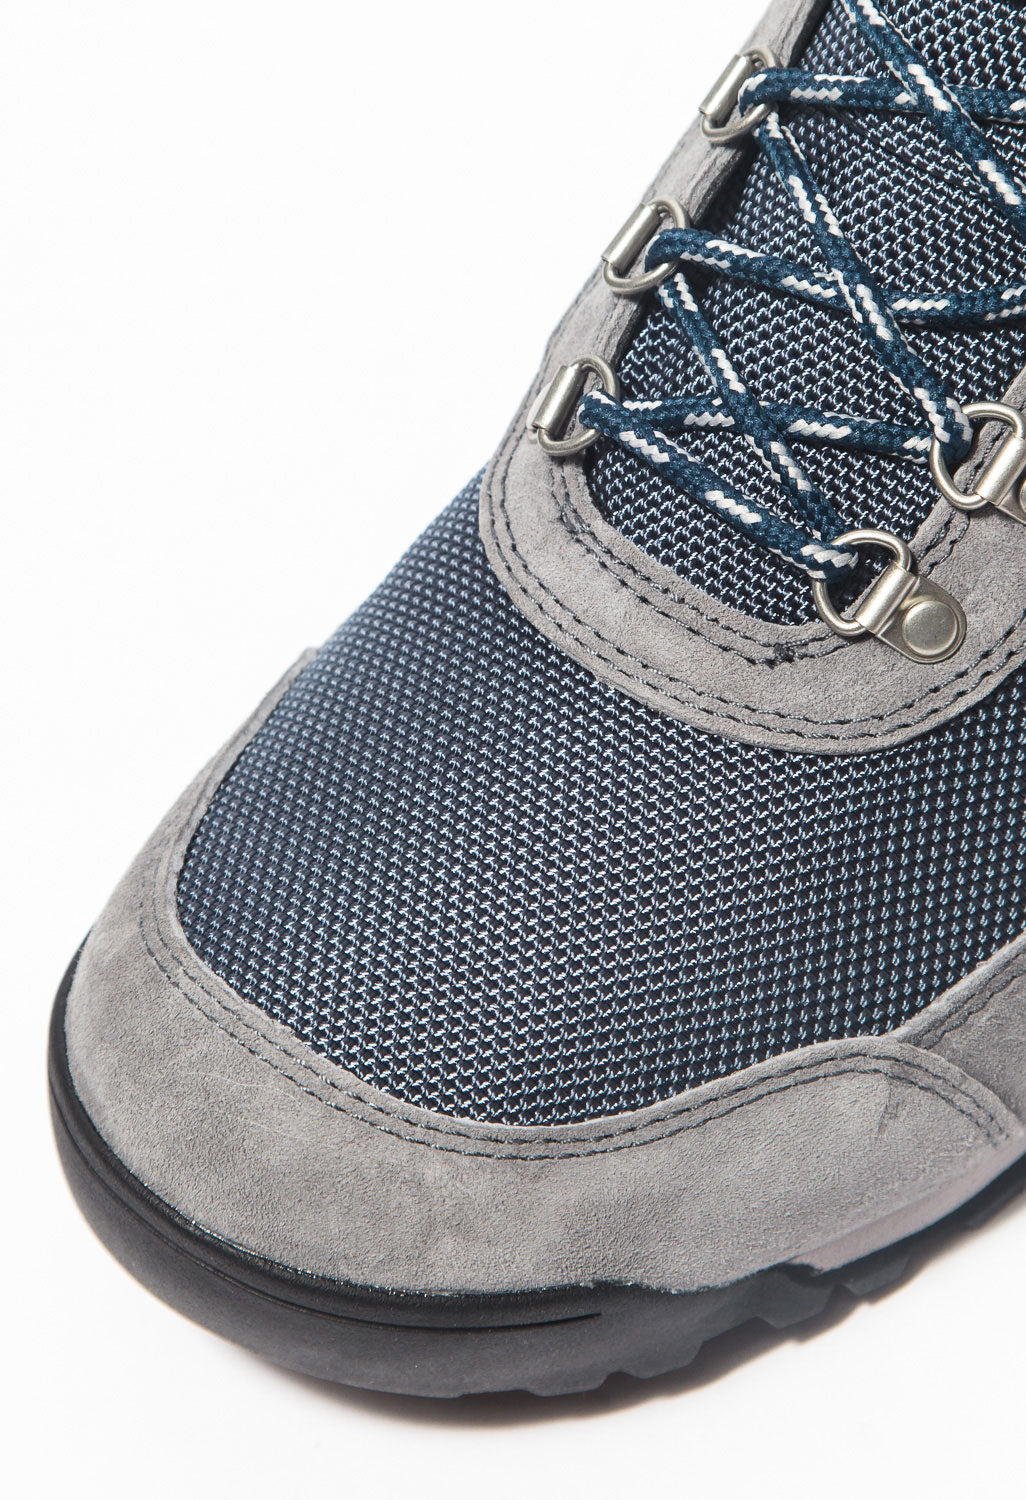 Danner Jag Women's Boots - Steel Grey/Blue Wing